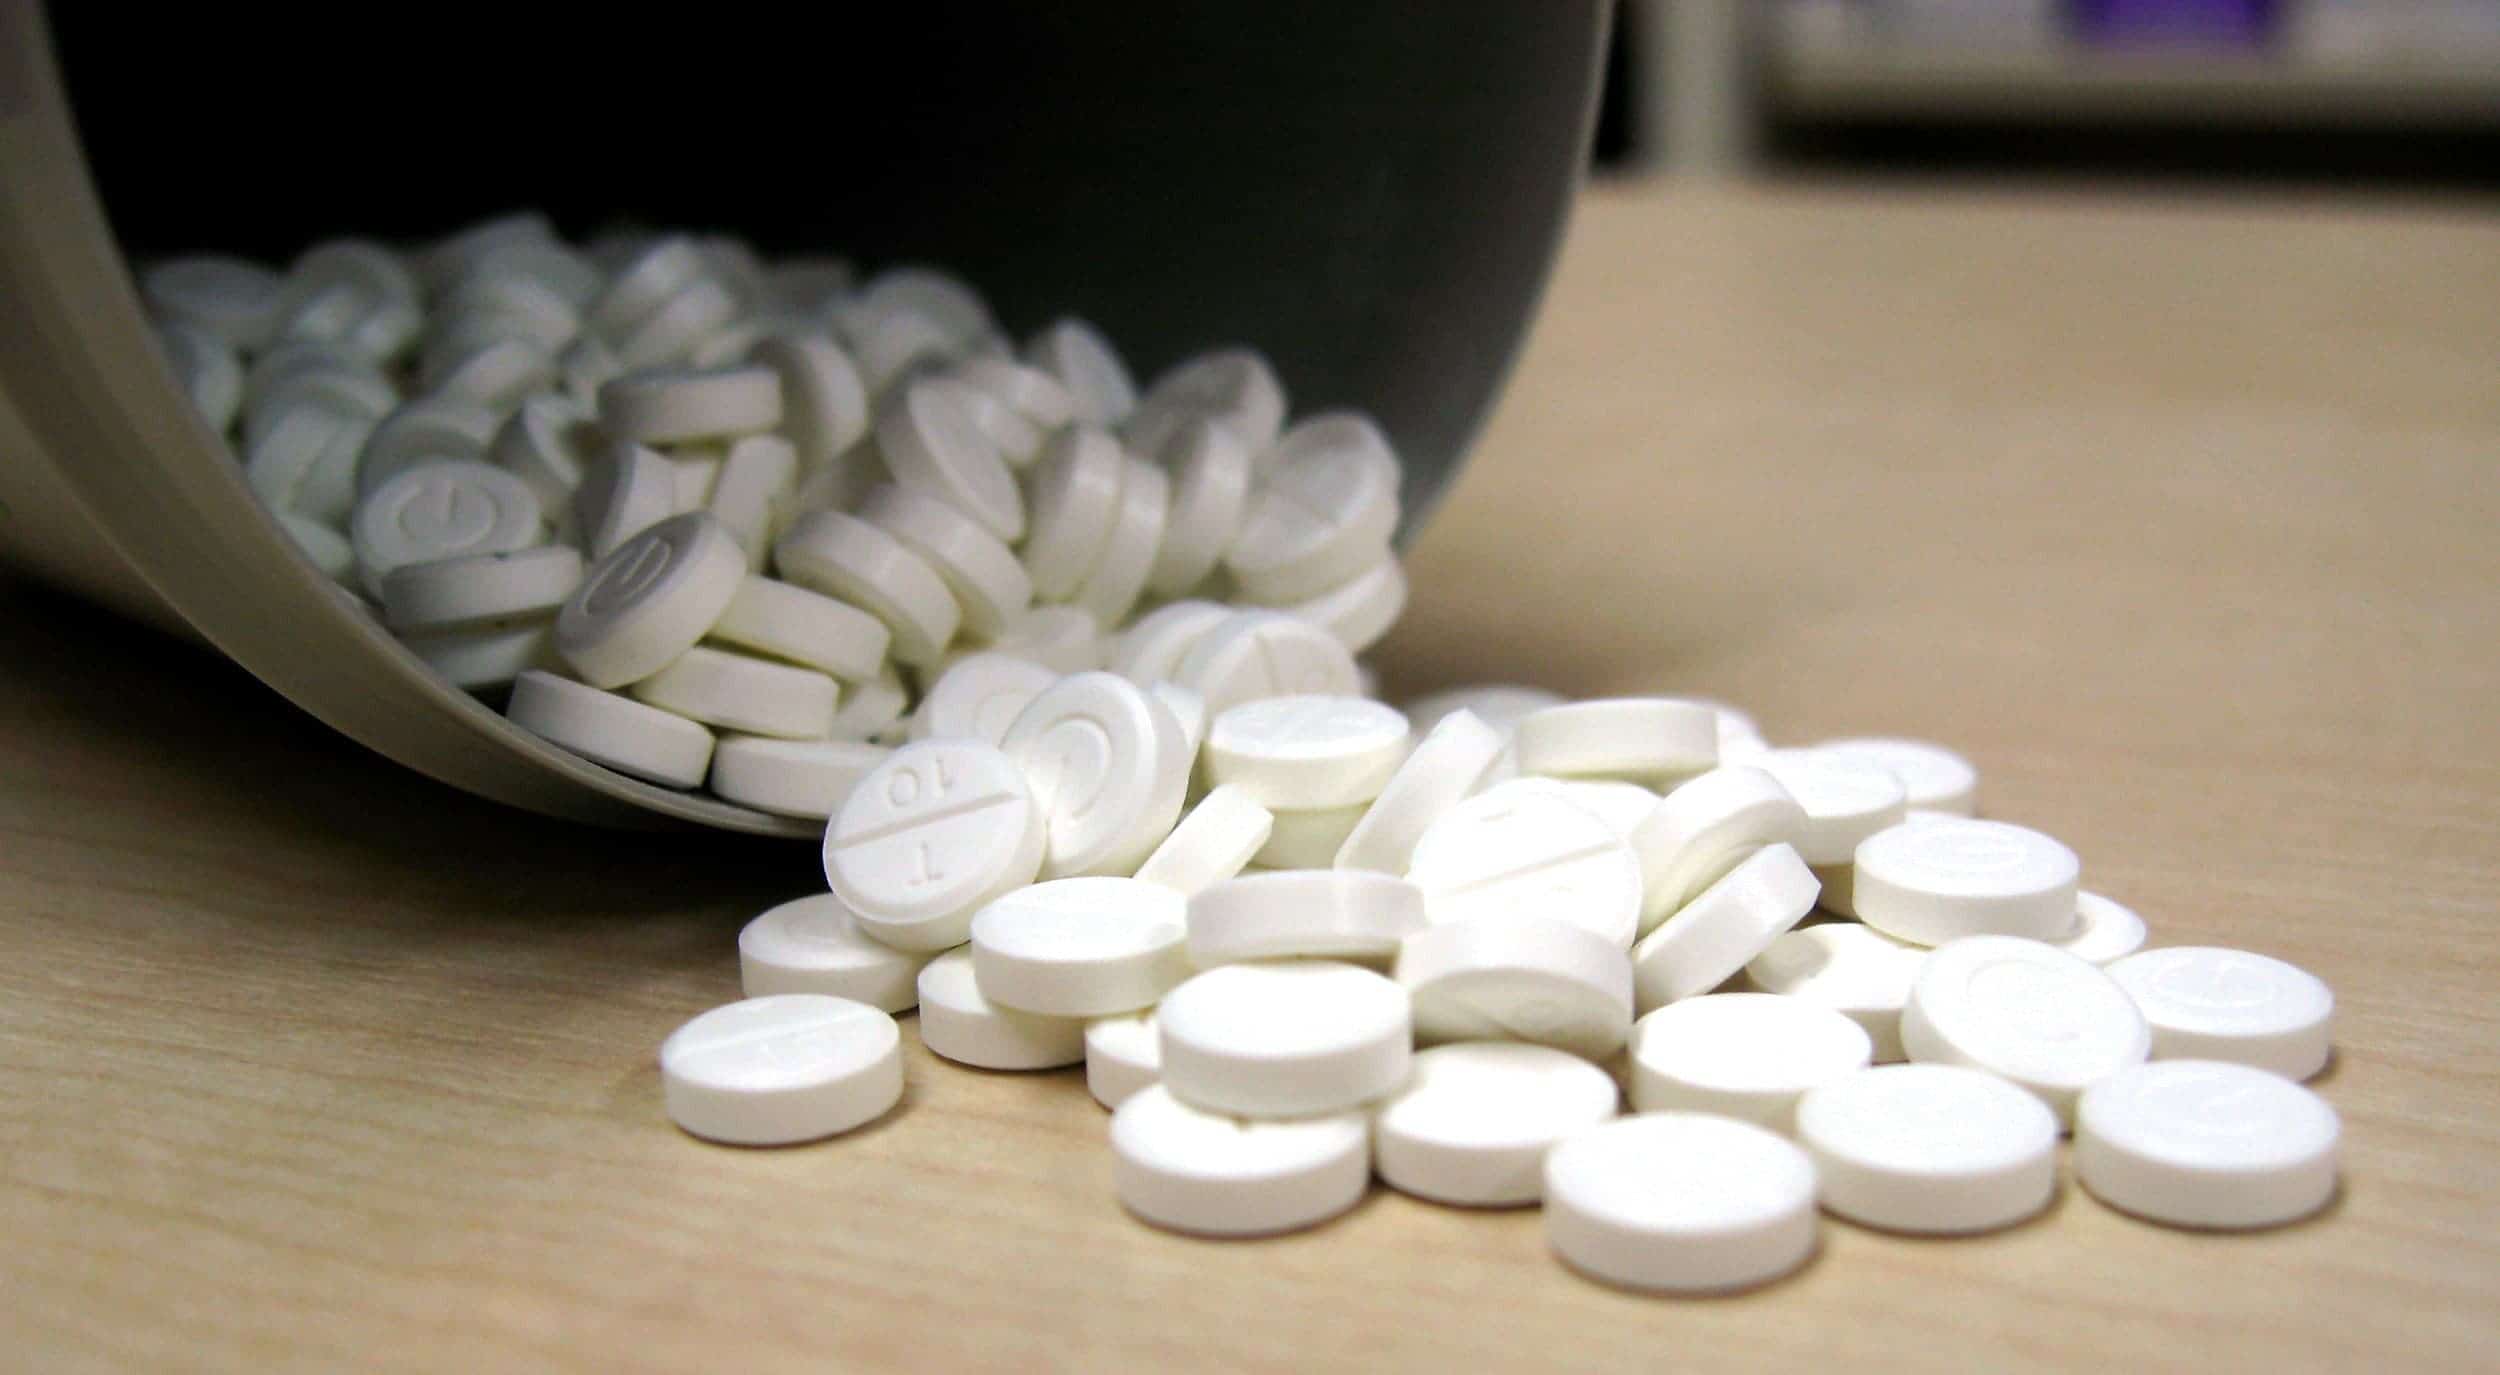 temazepam tablets 10mg pills